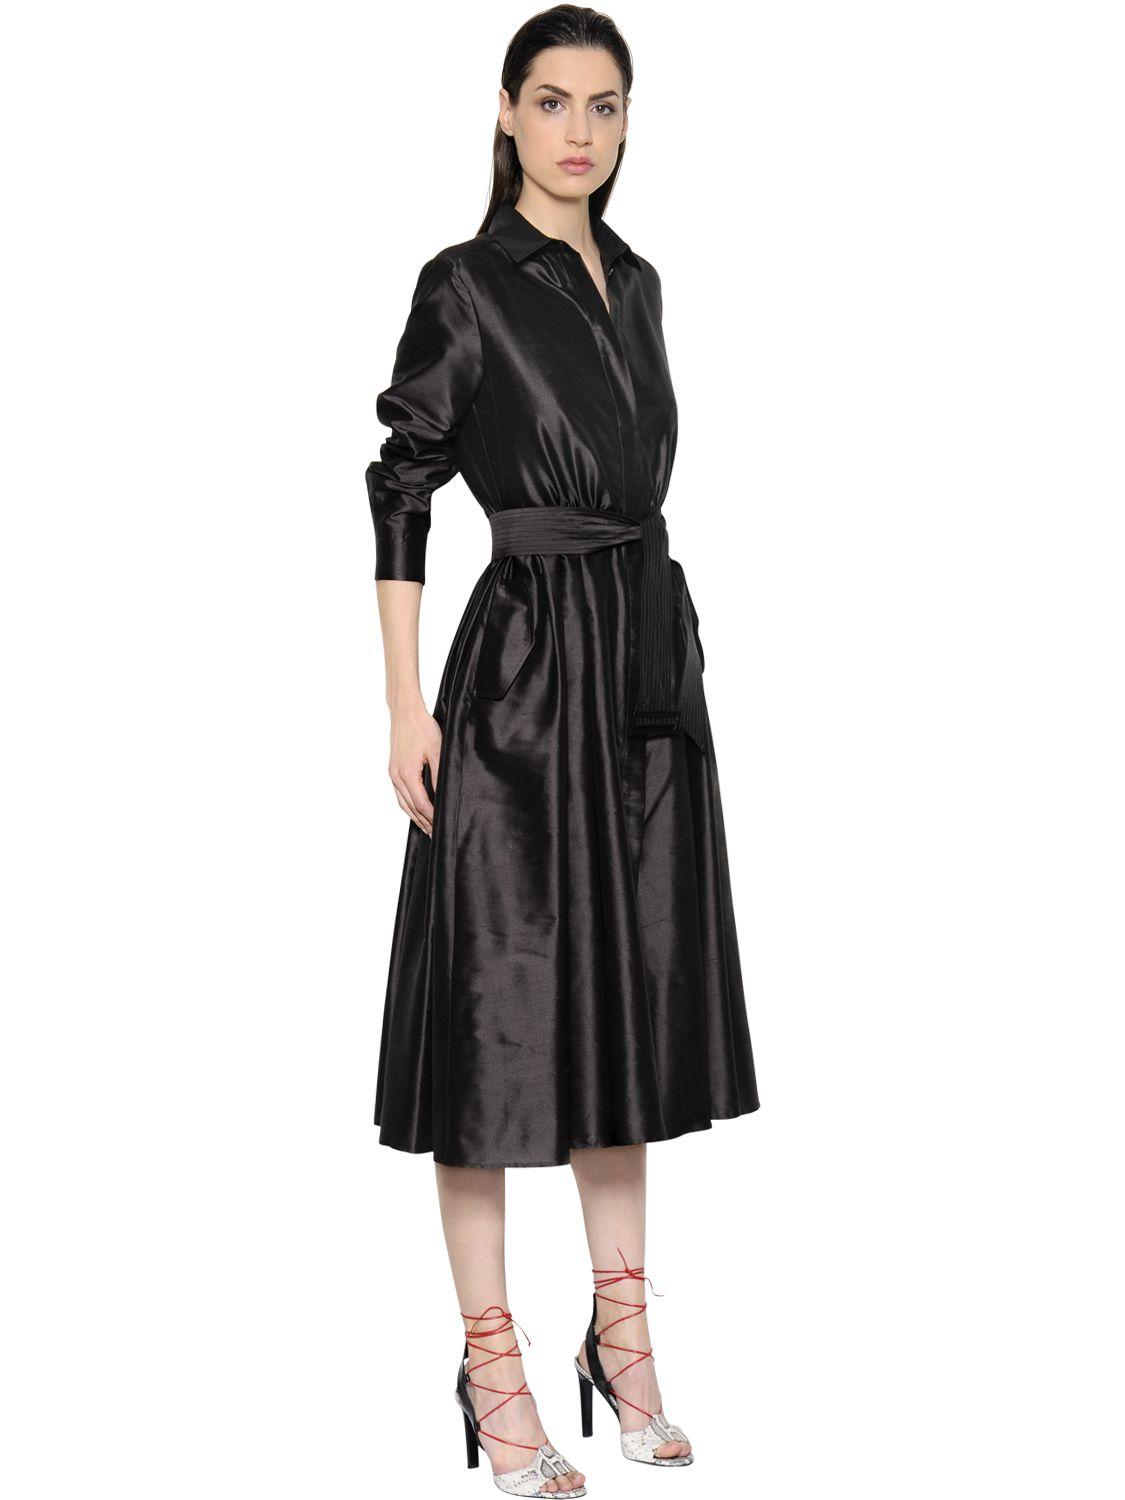 Max Mara Belted Shantung Silk Dress in Black - Lyst